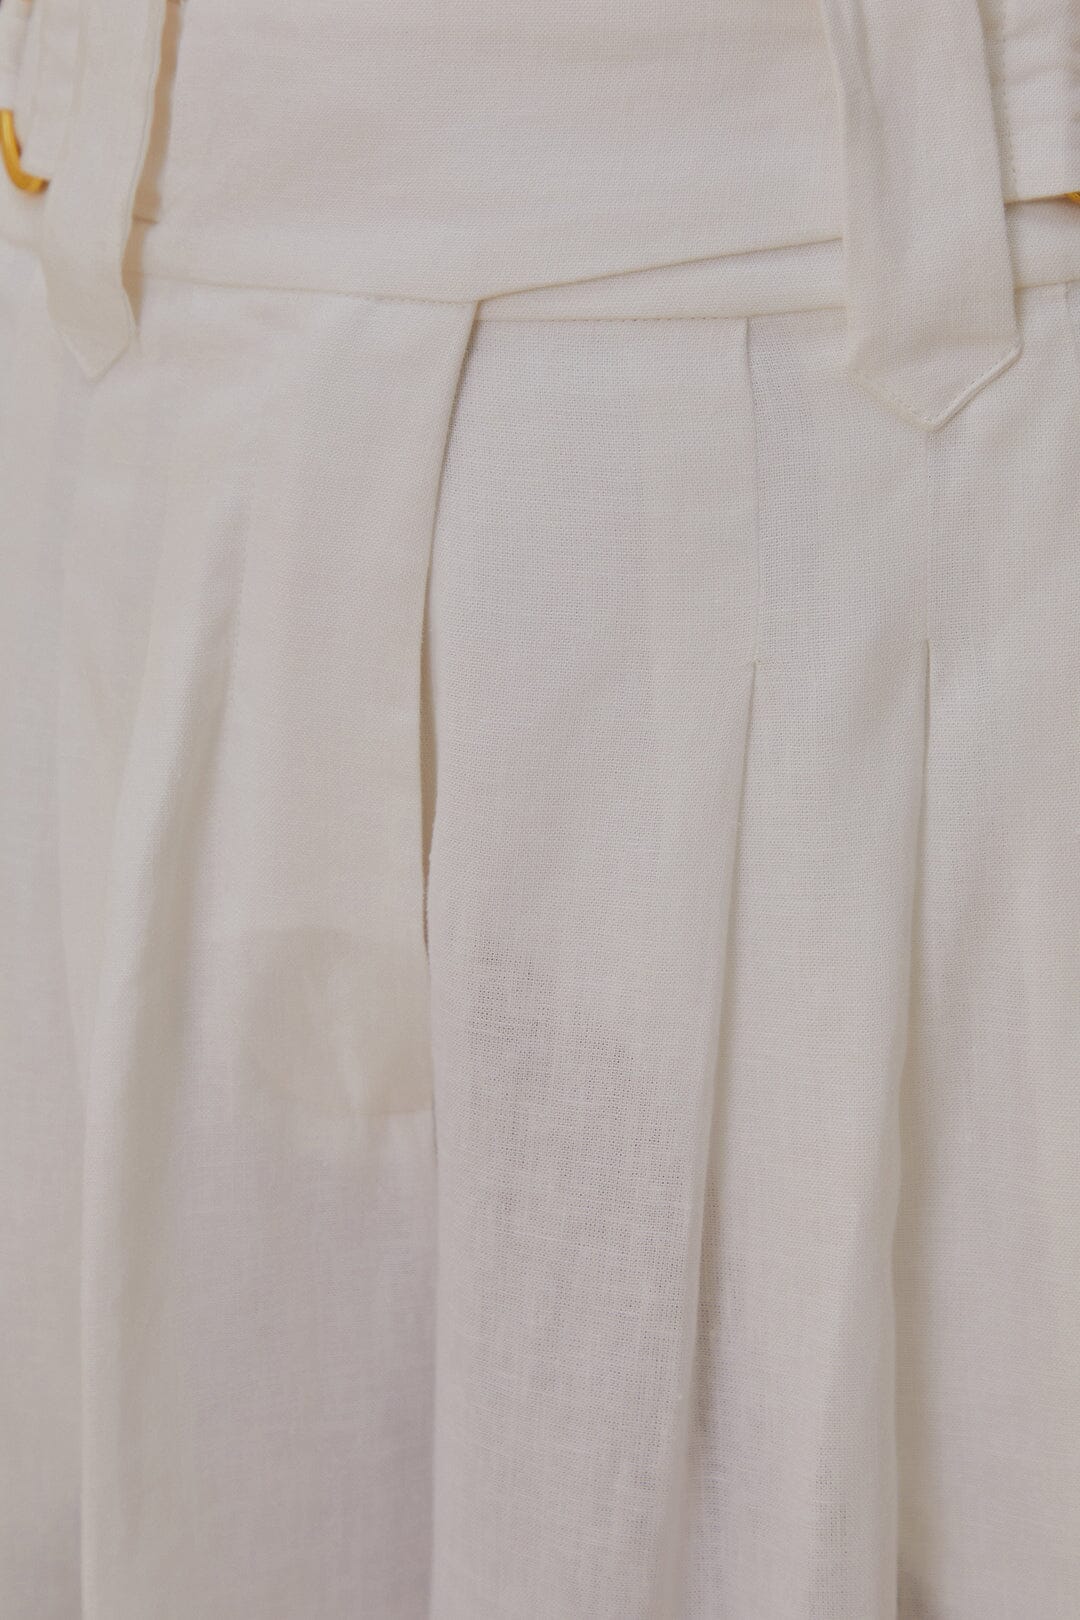 Off-White Linen Low Waist Pants